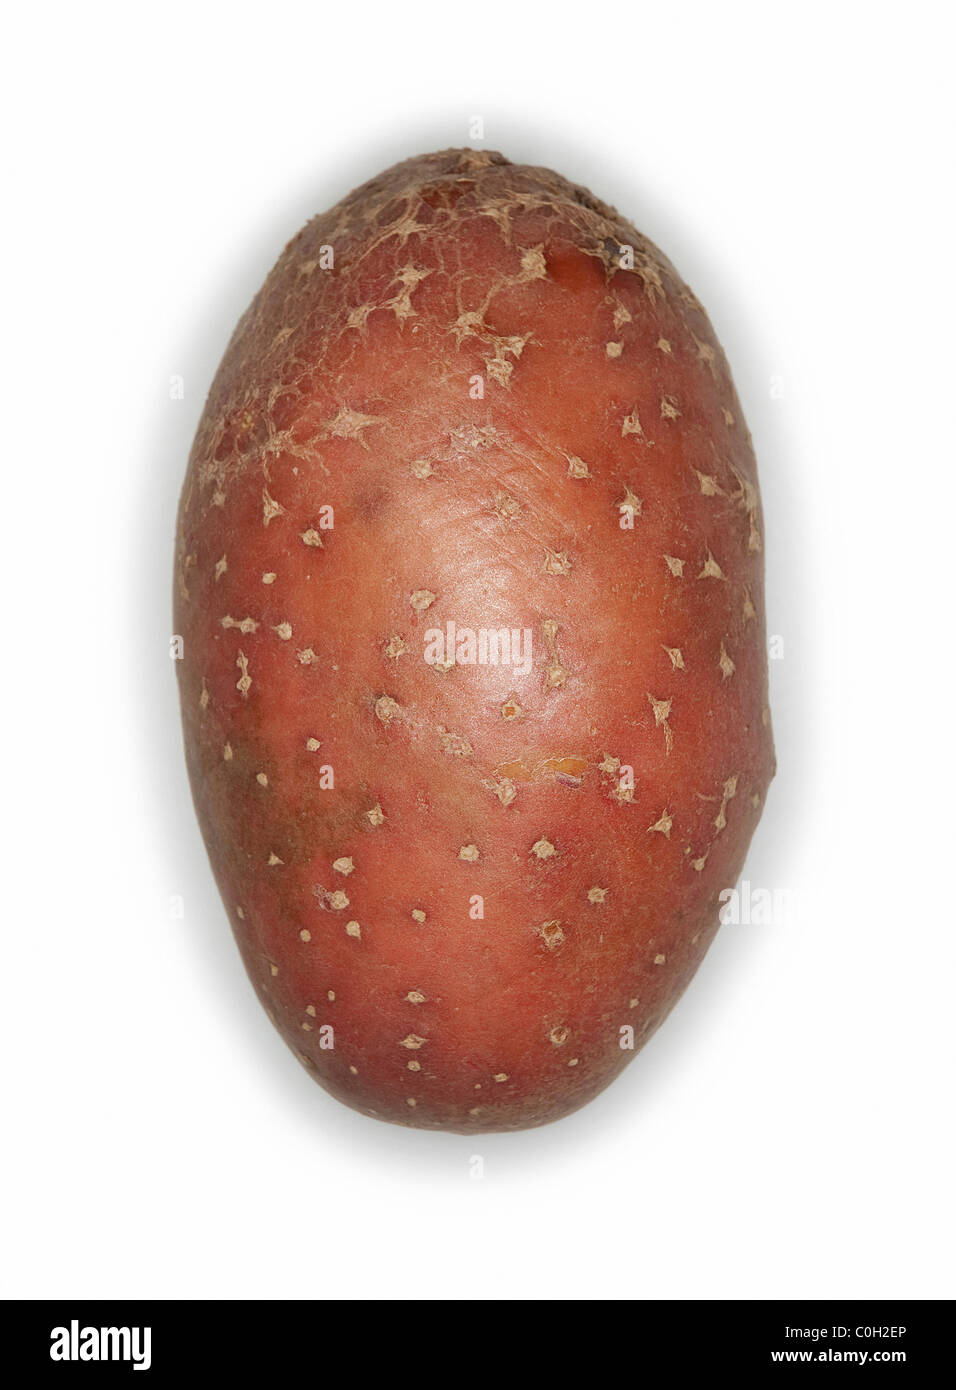 Potatoe on white background Stock Photo